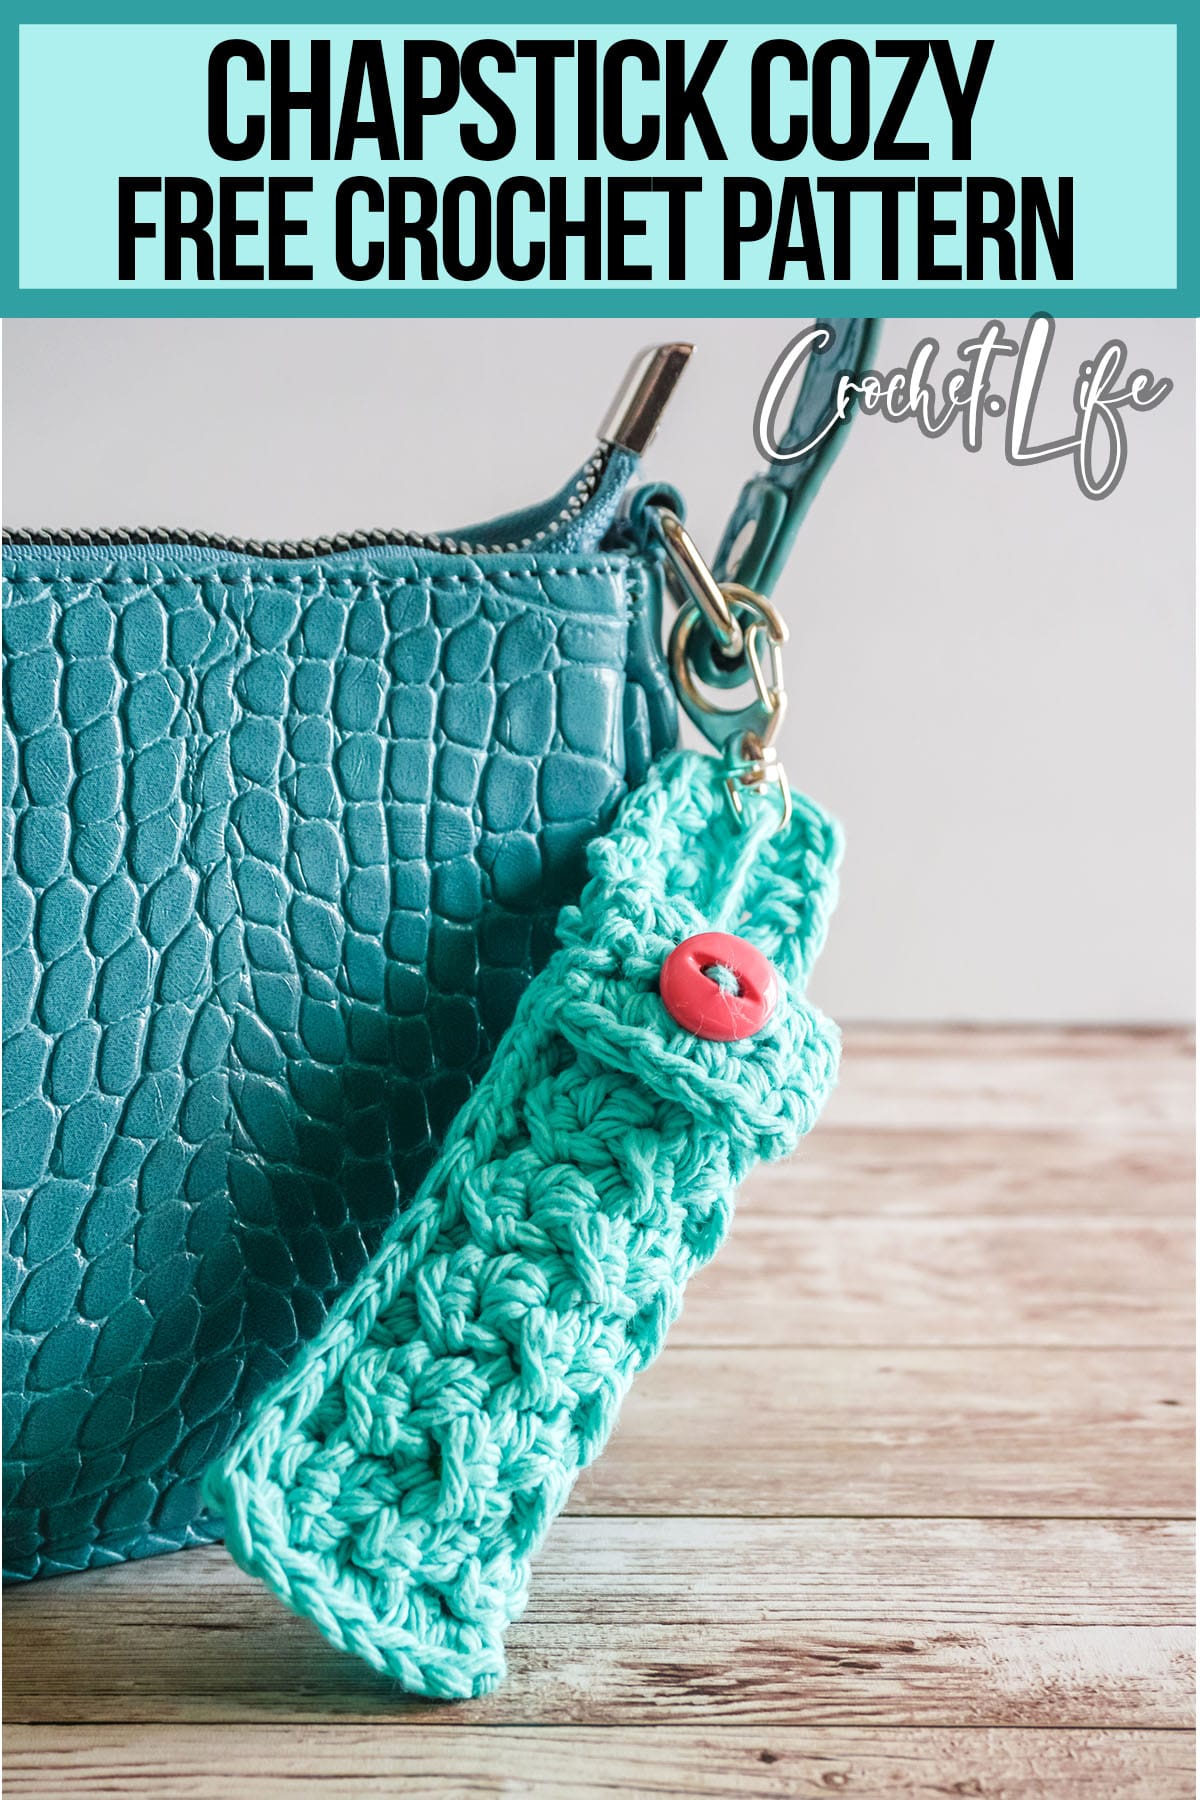 chapstick holder crochet pattern with text which reads chapstick cozy free crochet pattern